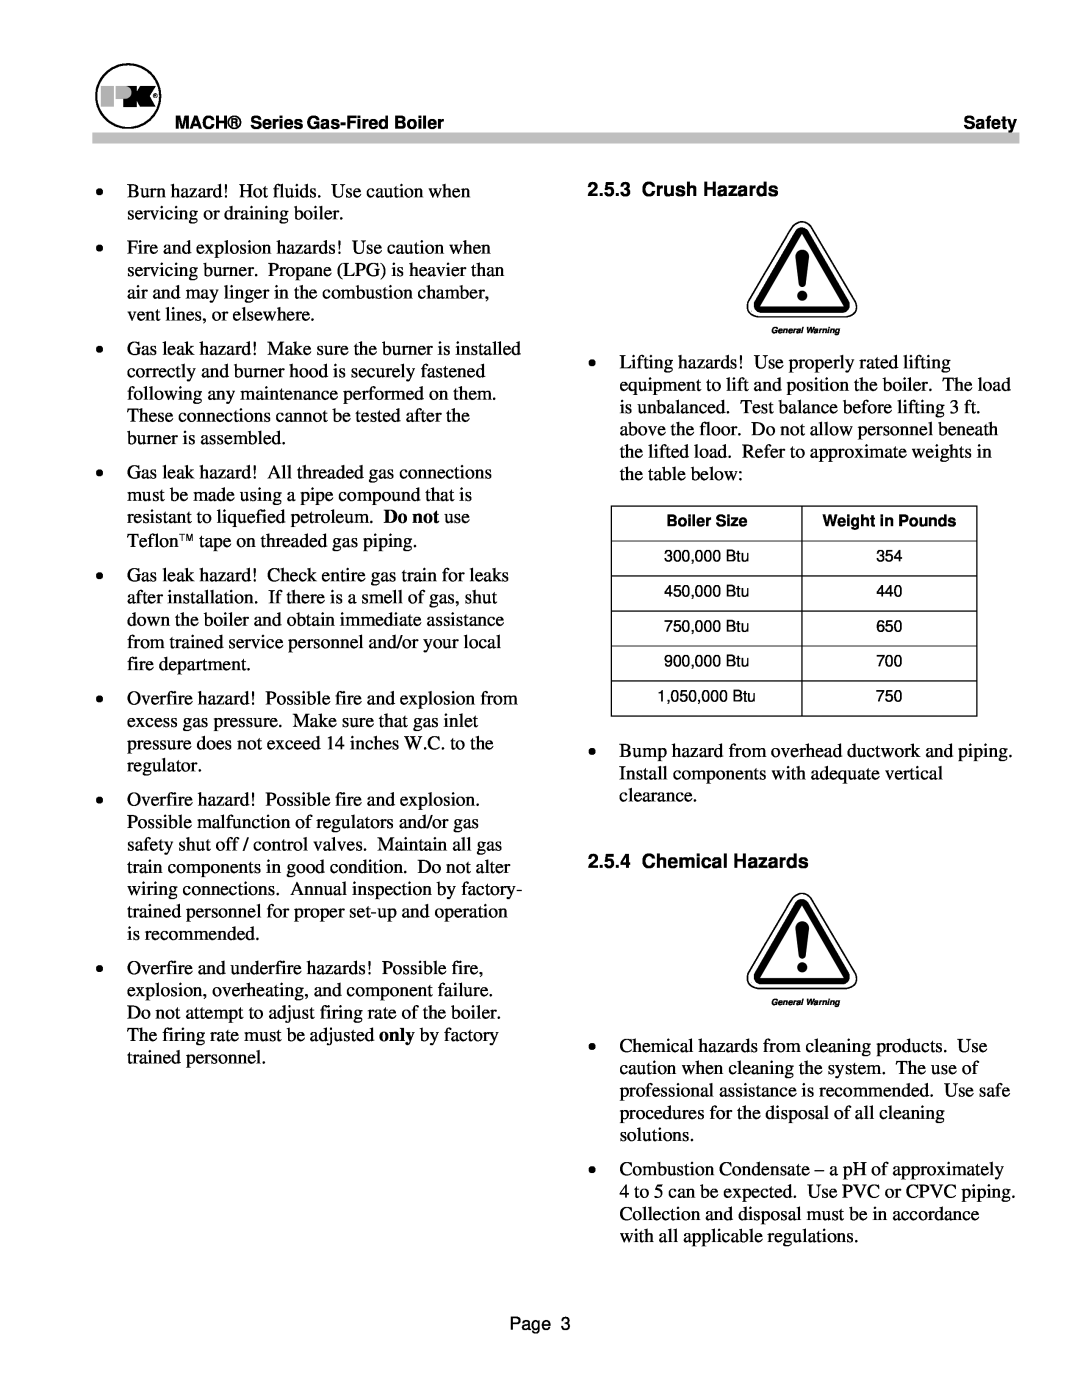 Patterson-Kelley MACH-05 manual Crush Hazards, Chemical Hazards 